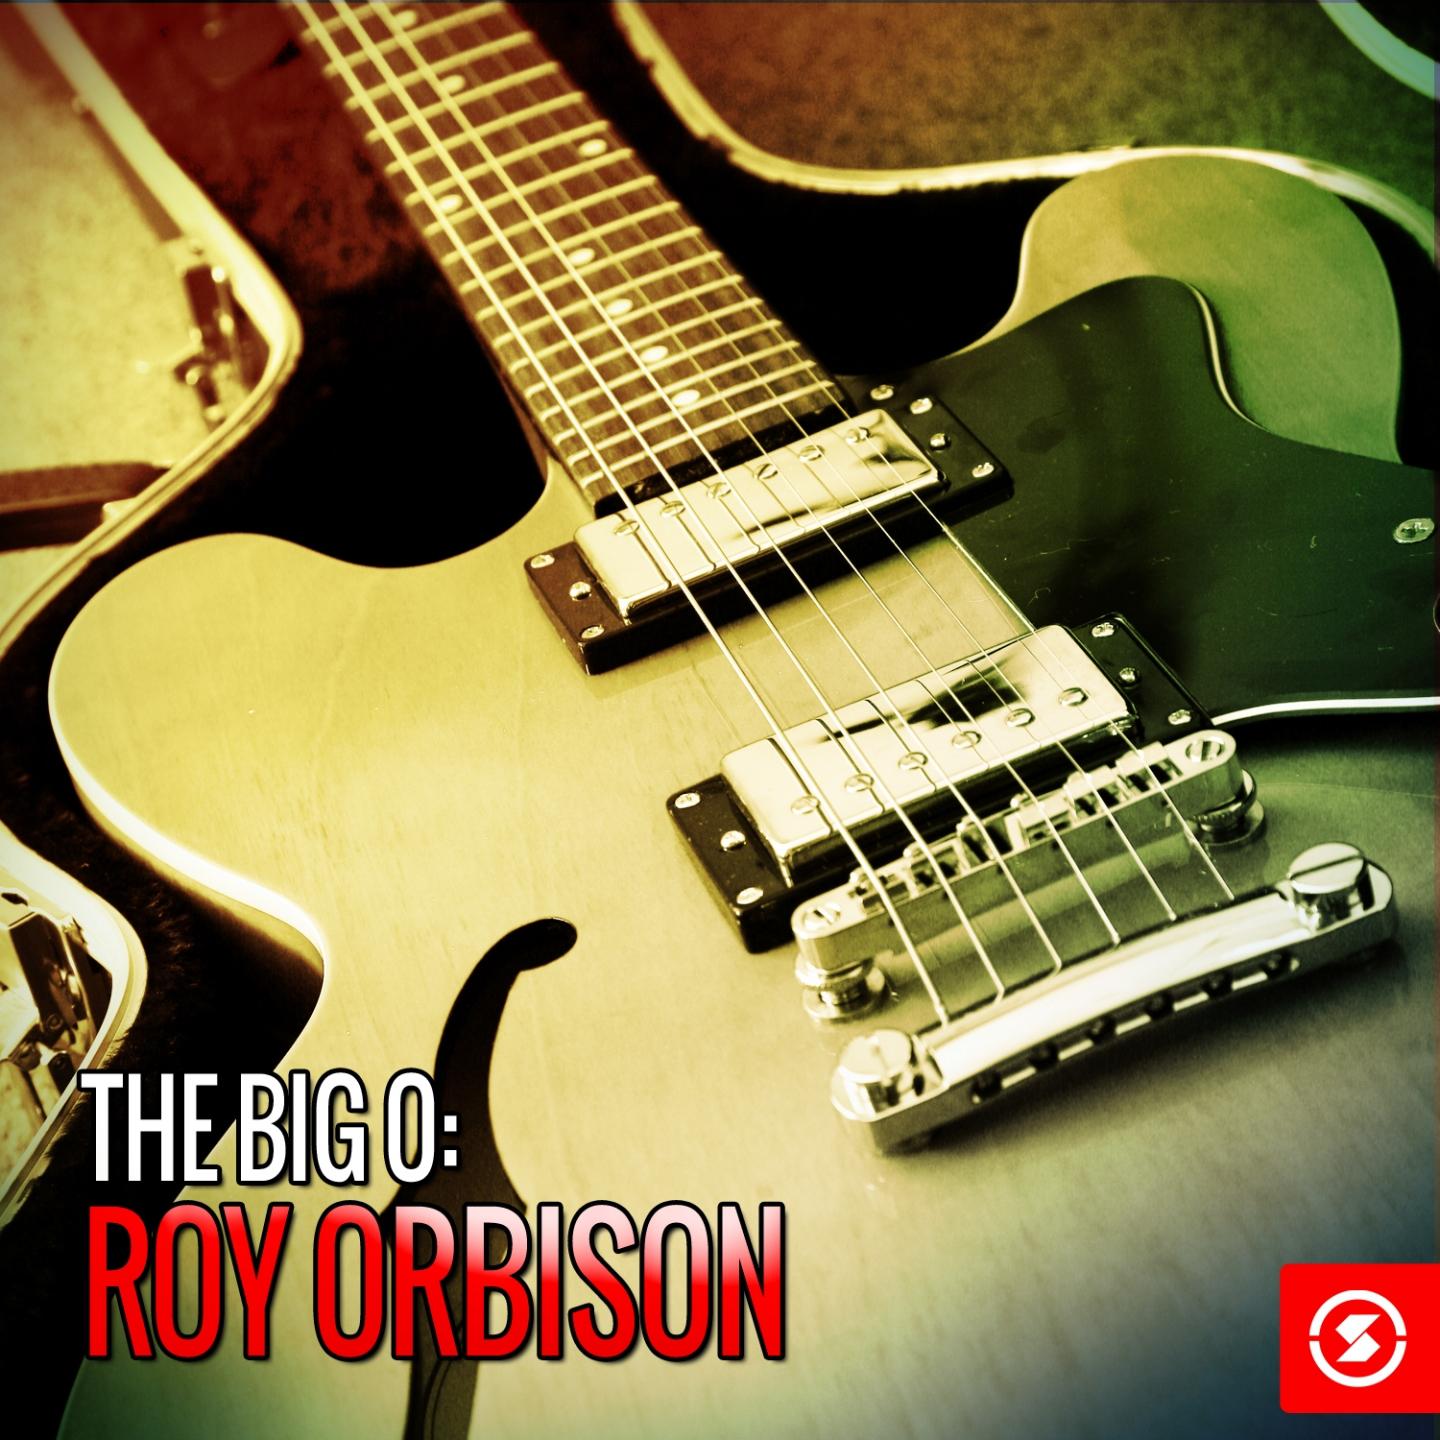 The Big O: Roy Orbison